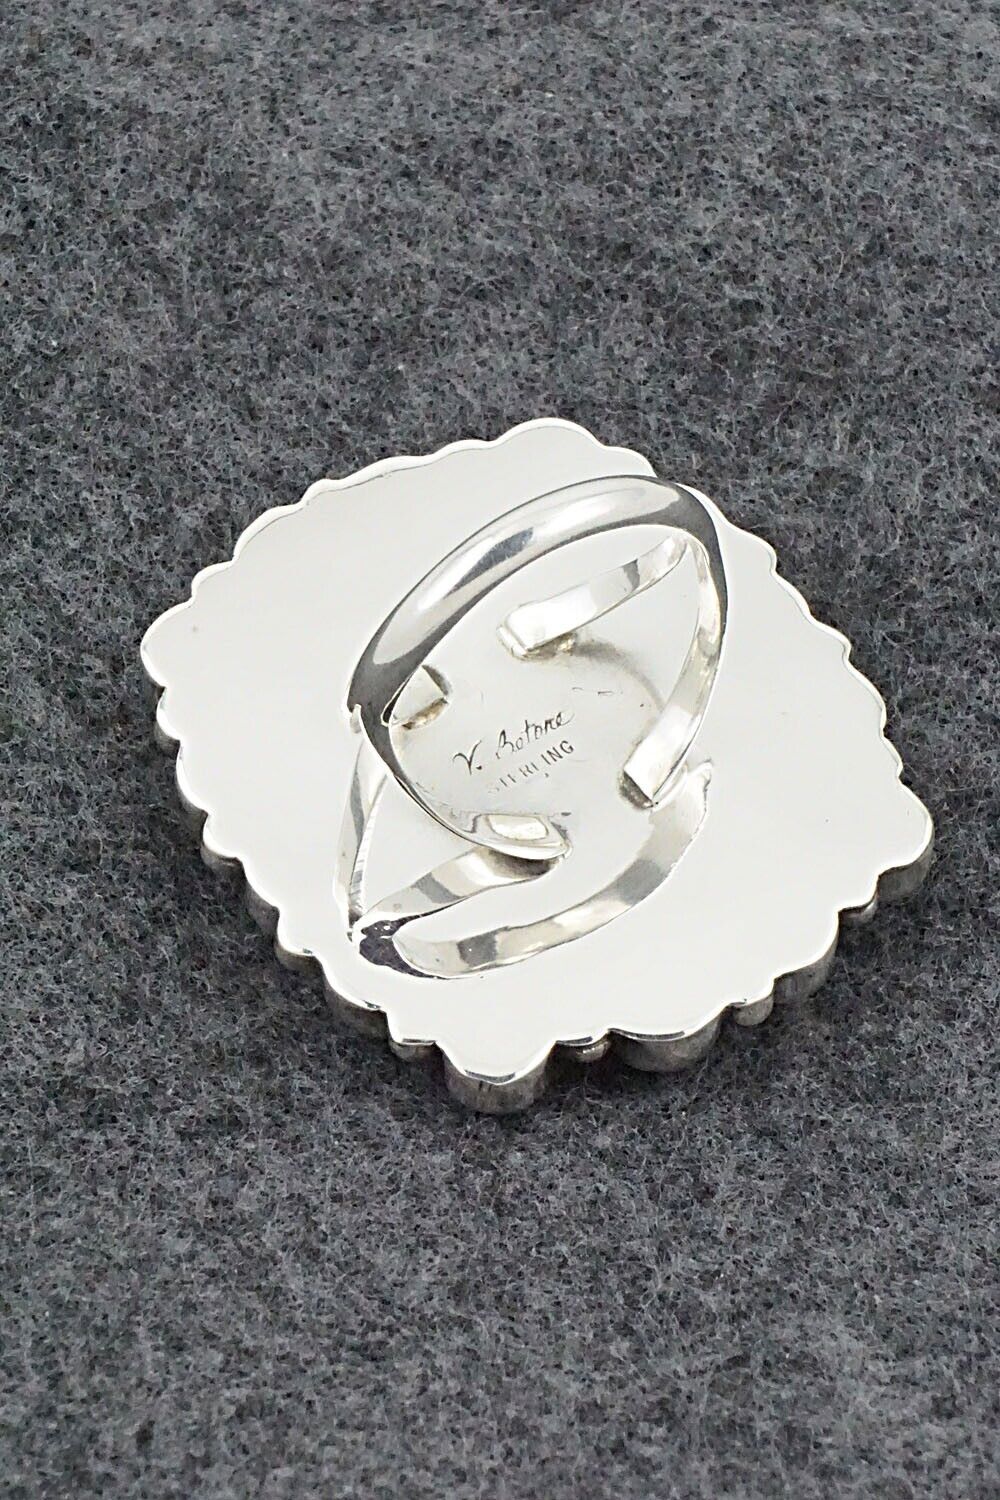 Onyx & Sterling Silver Ring - Verley Betone - Size 8.5